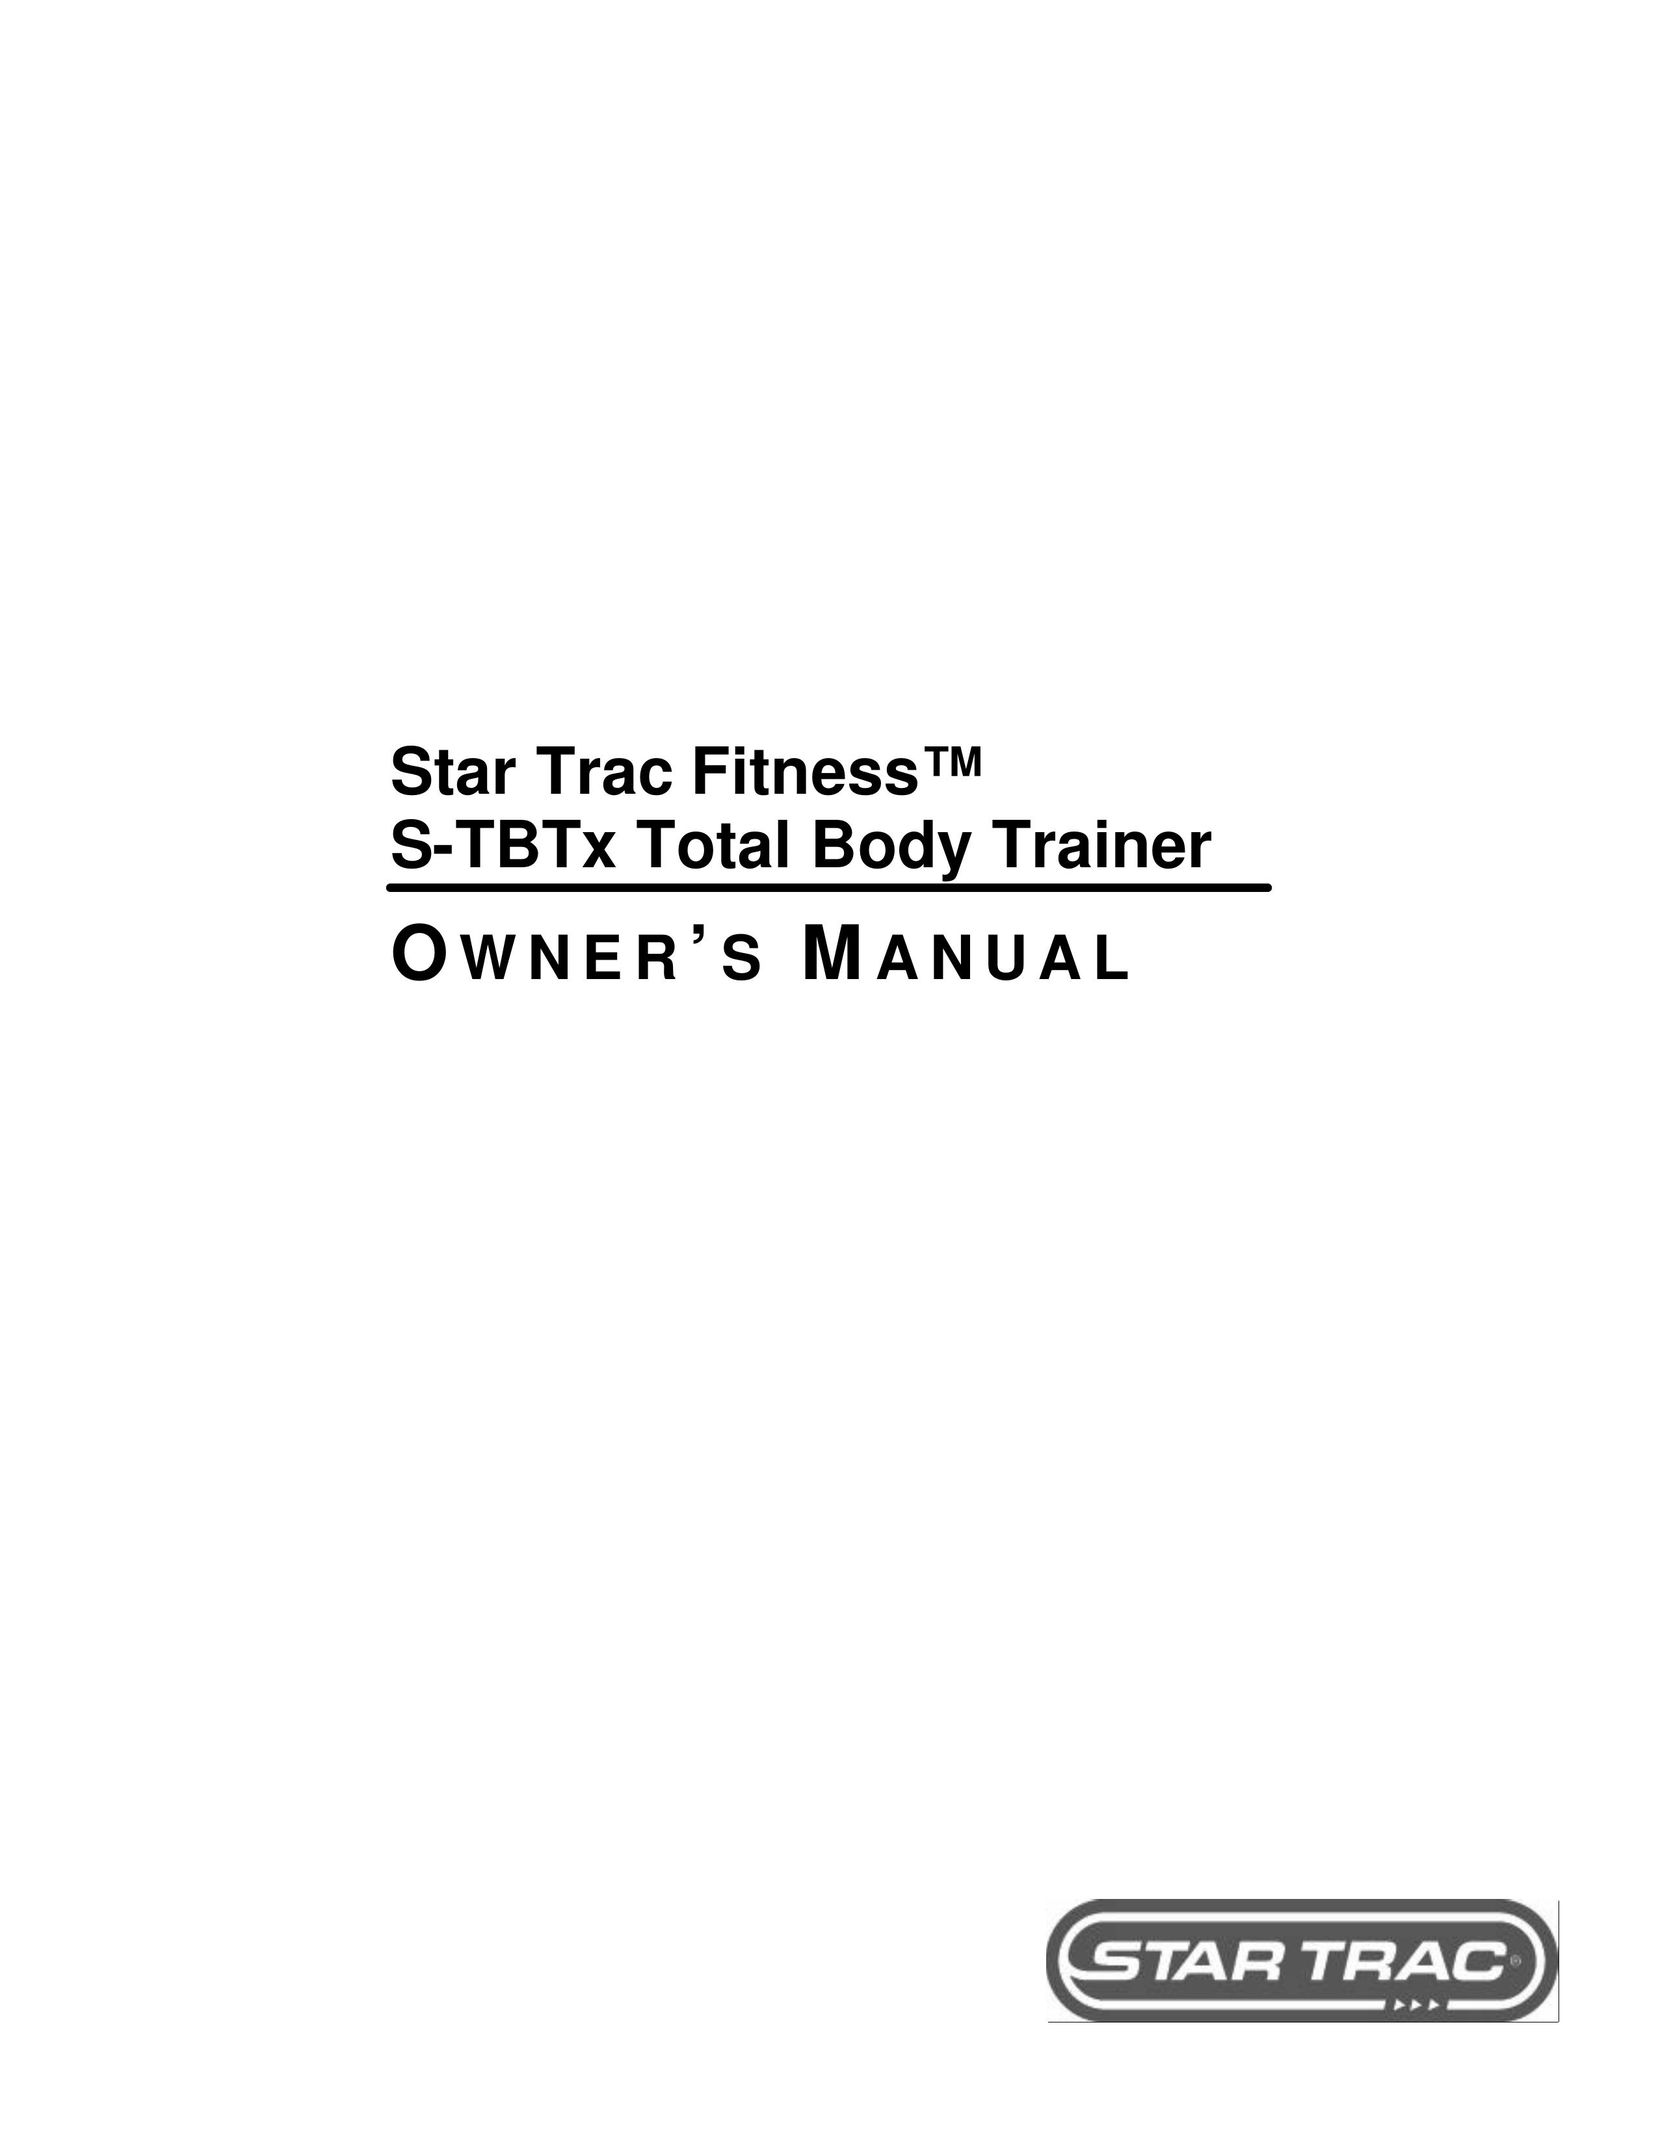 Star Trac S-TBTX Fitness Equipment User Manual